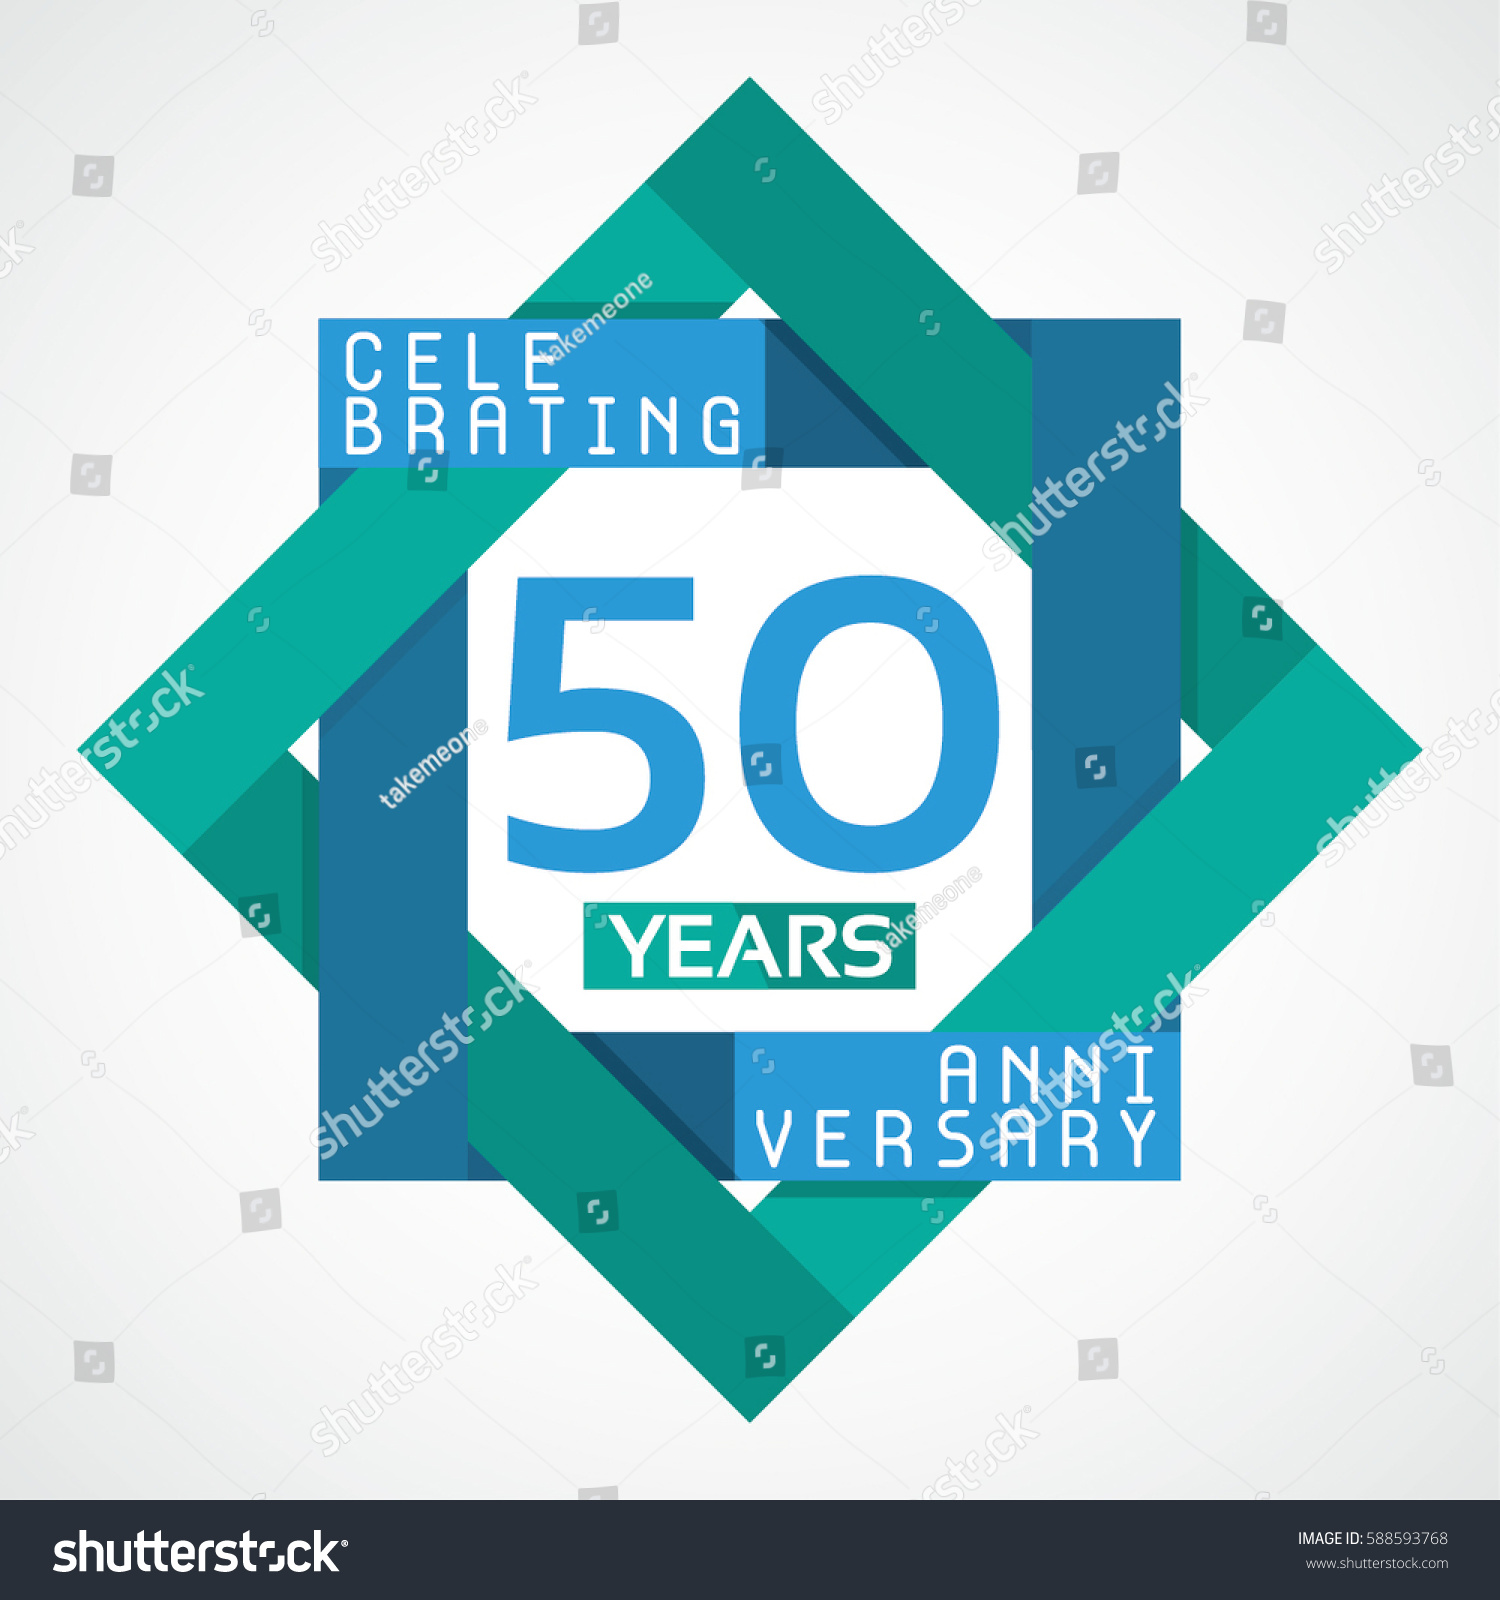 SVG of 50 Years Anniversary Celebration Design.
 svg